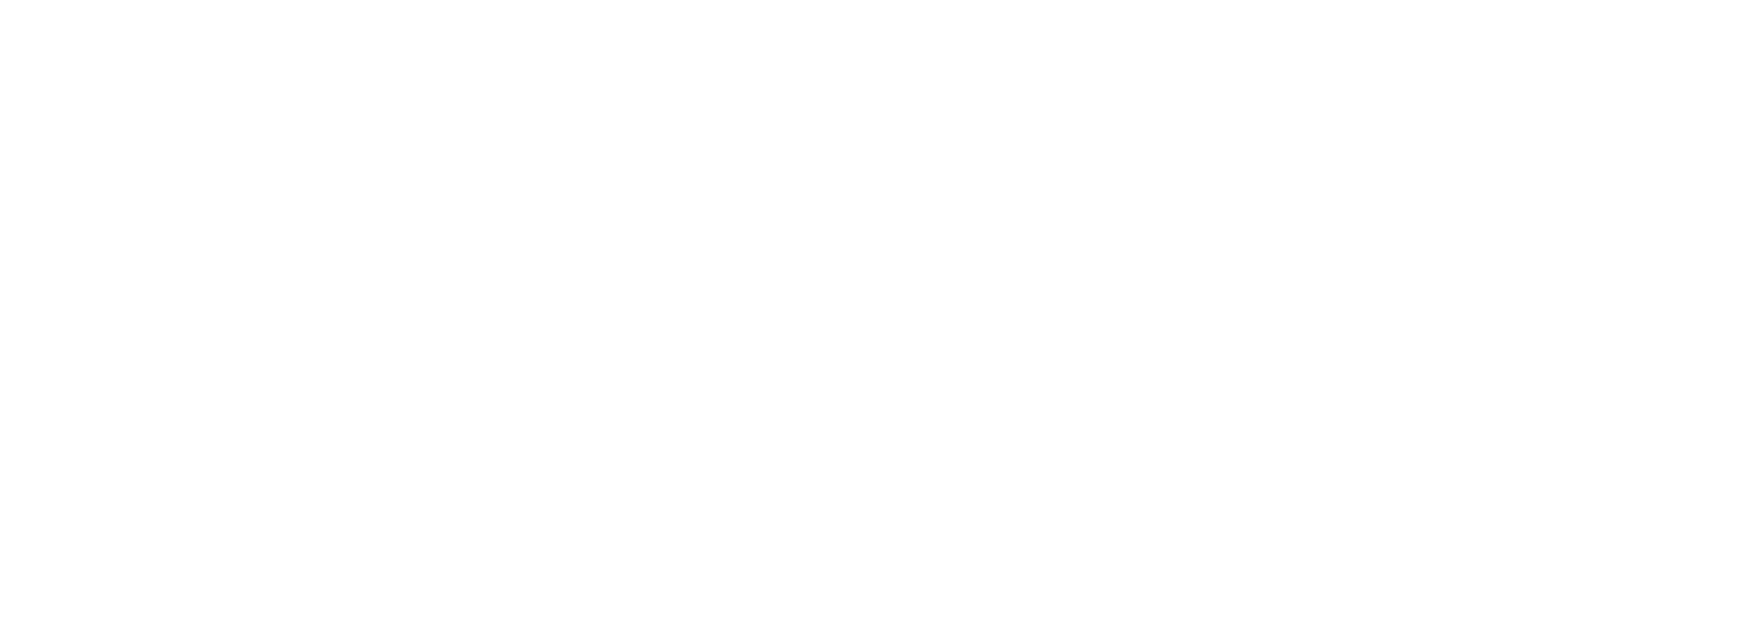 The Health Plan Logo